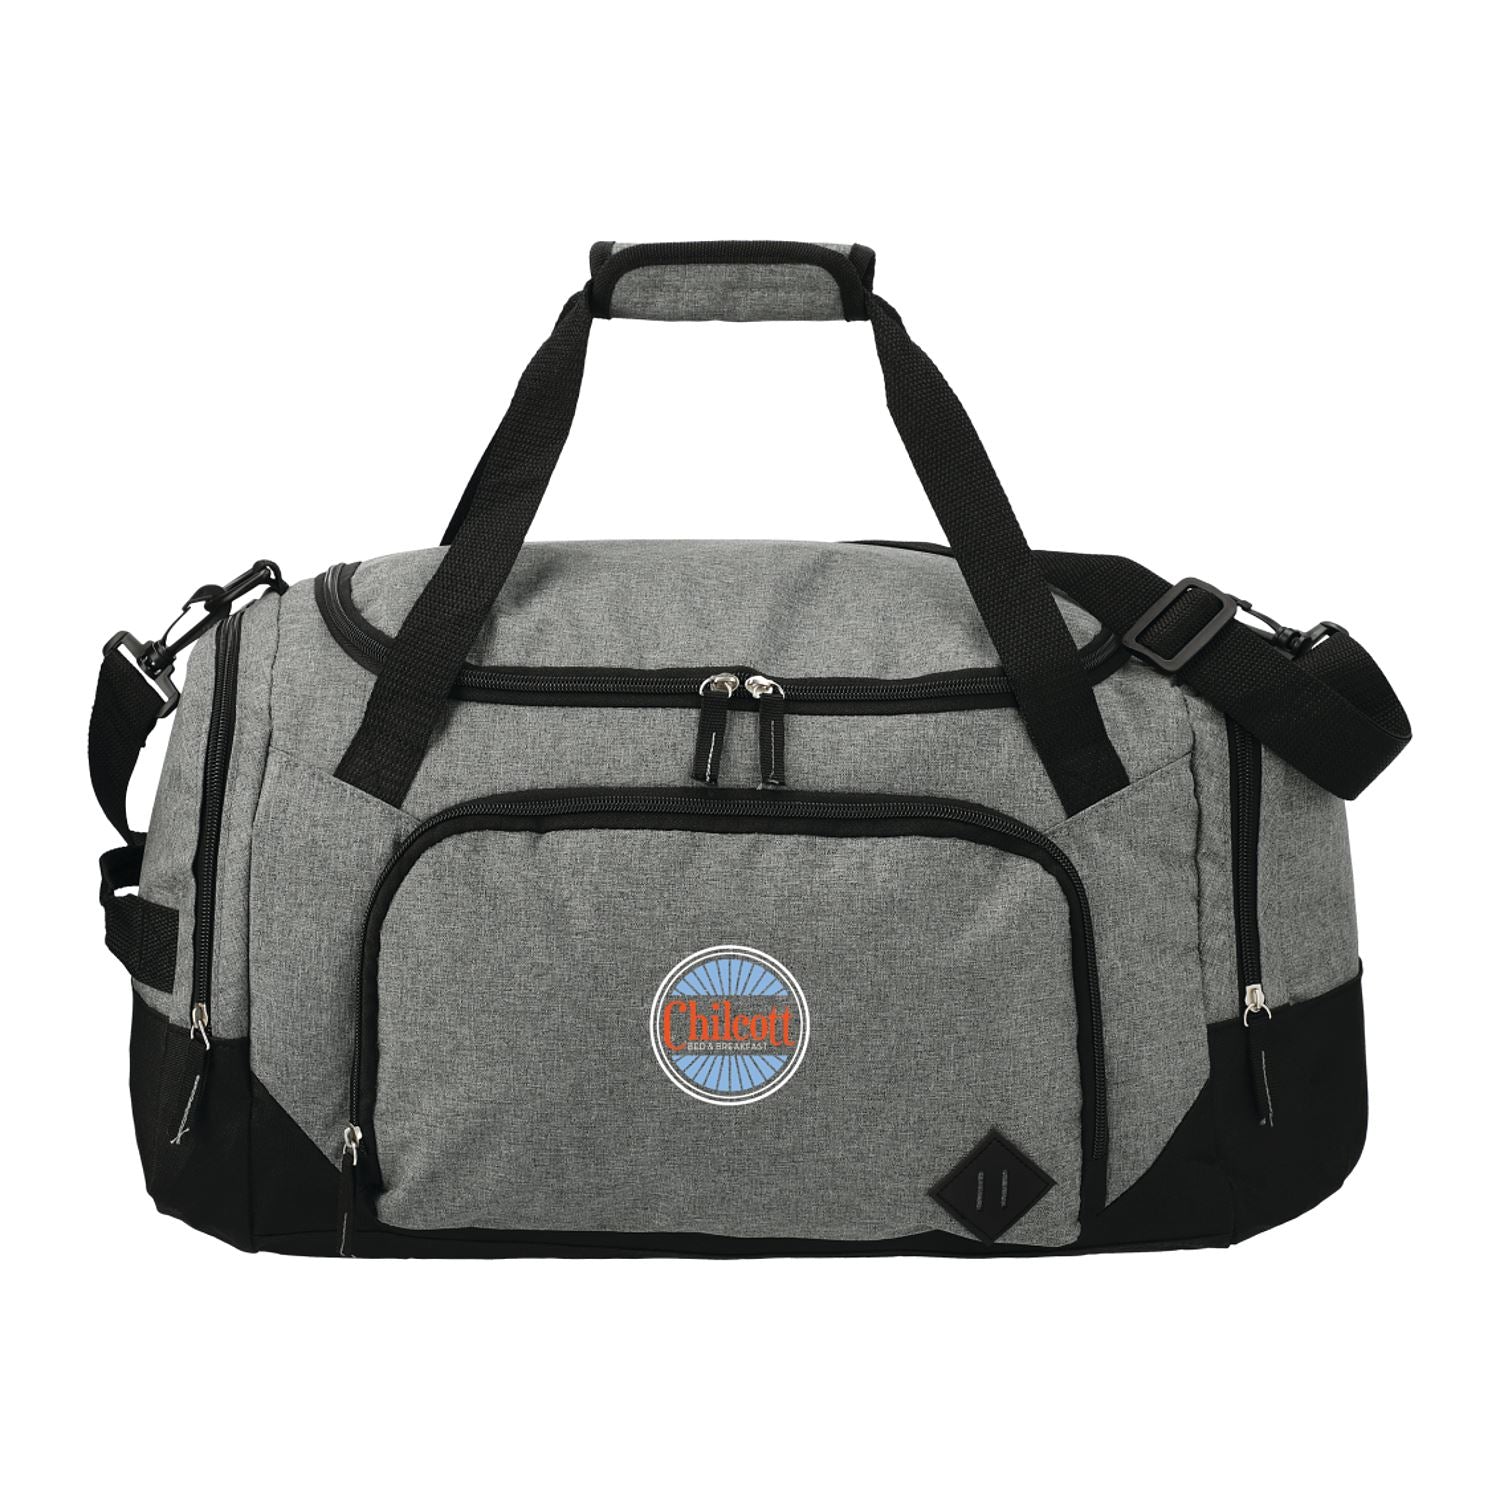 Graphite Weekender Duffel Bag Charcoal Multi Color 